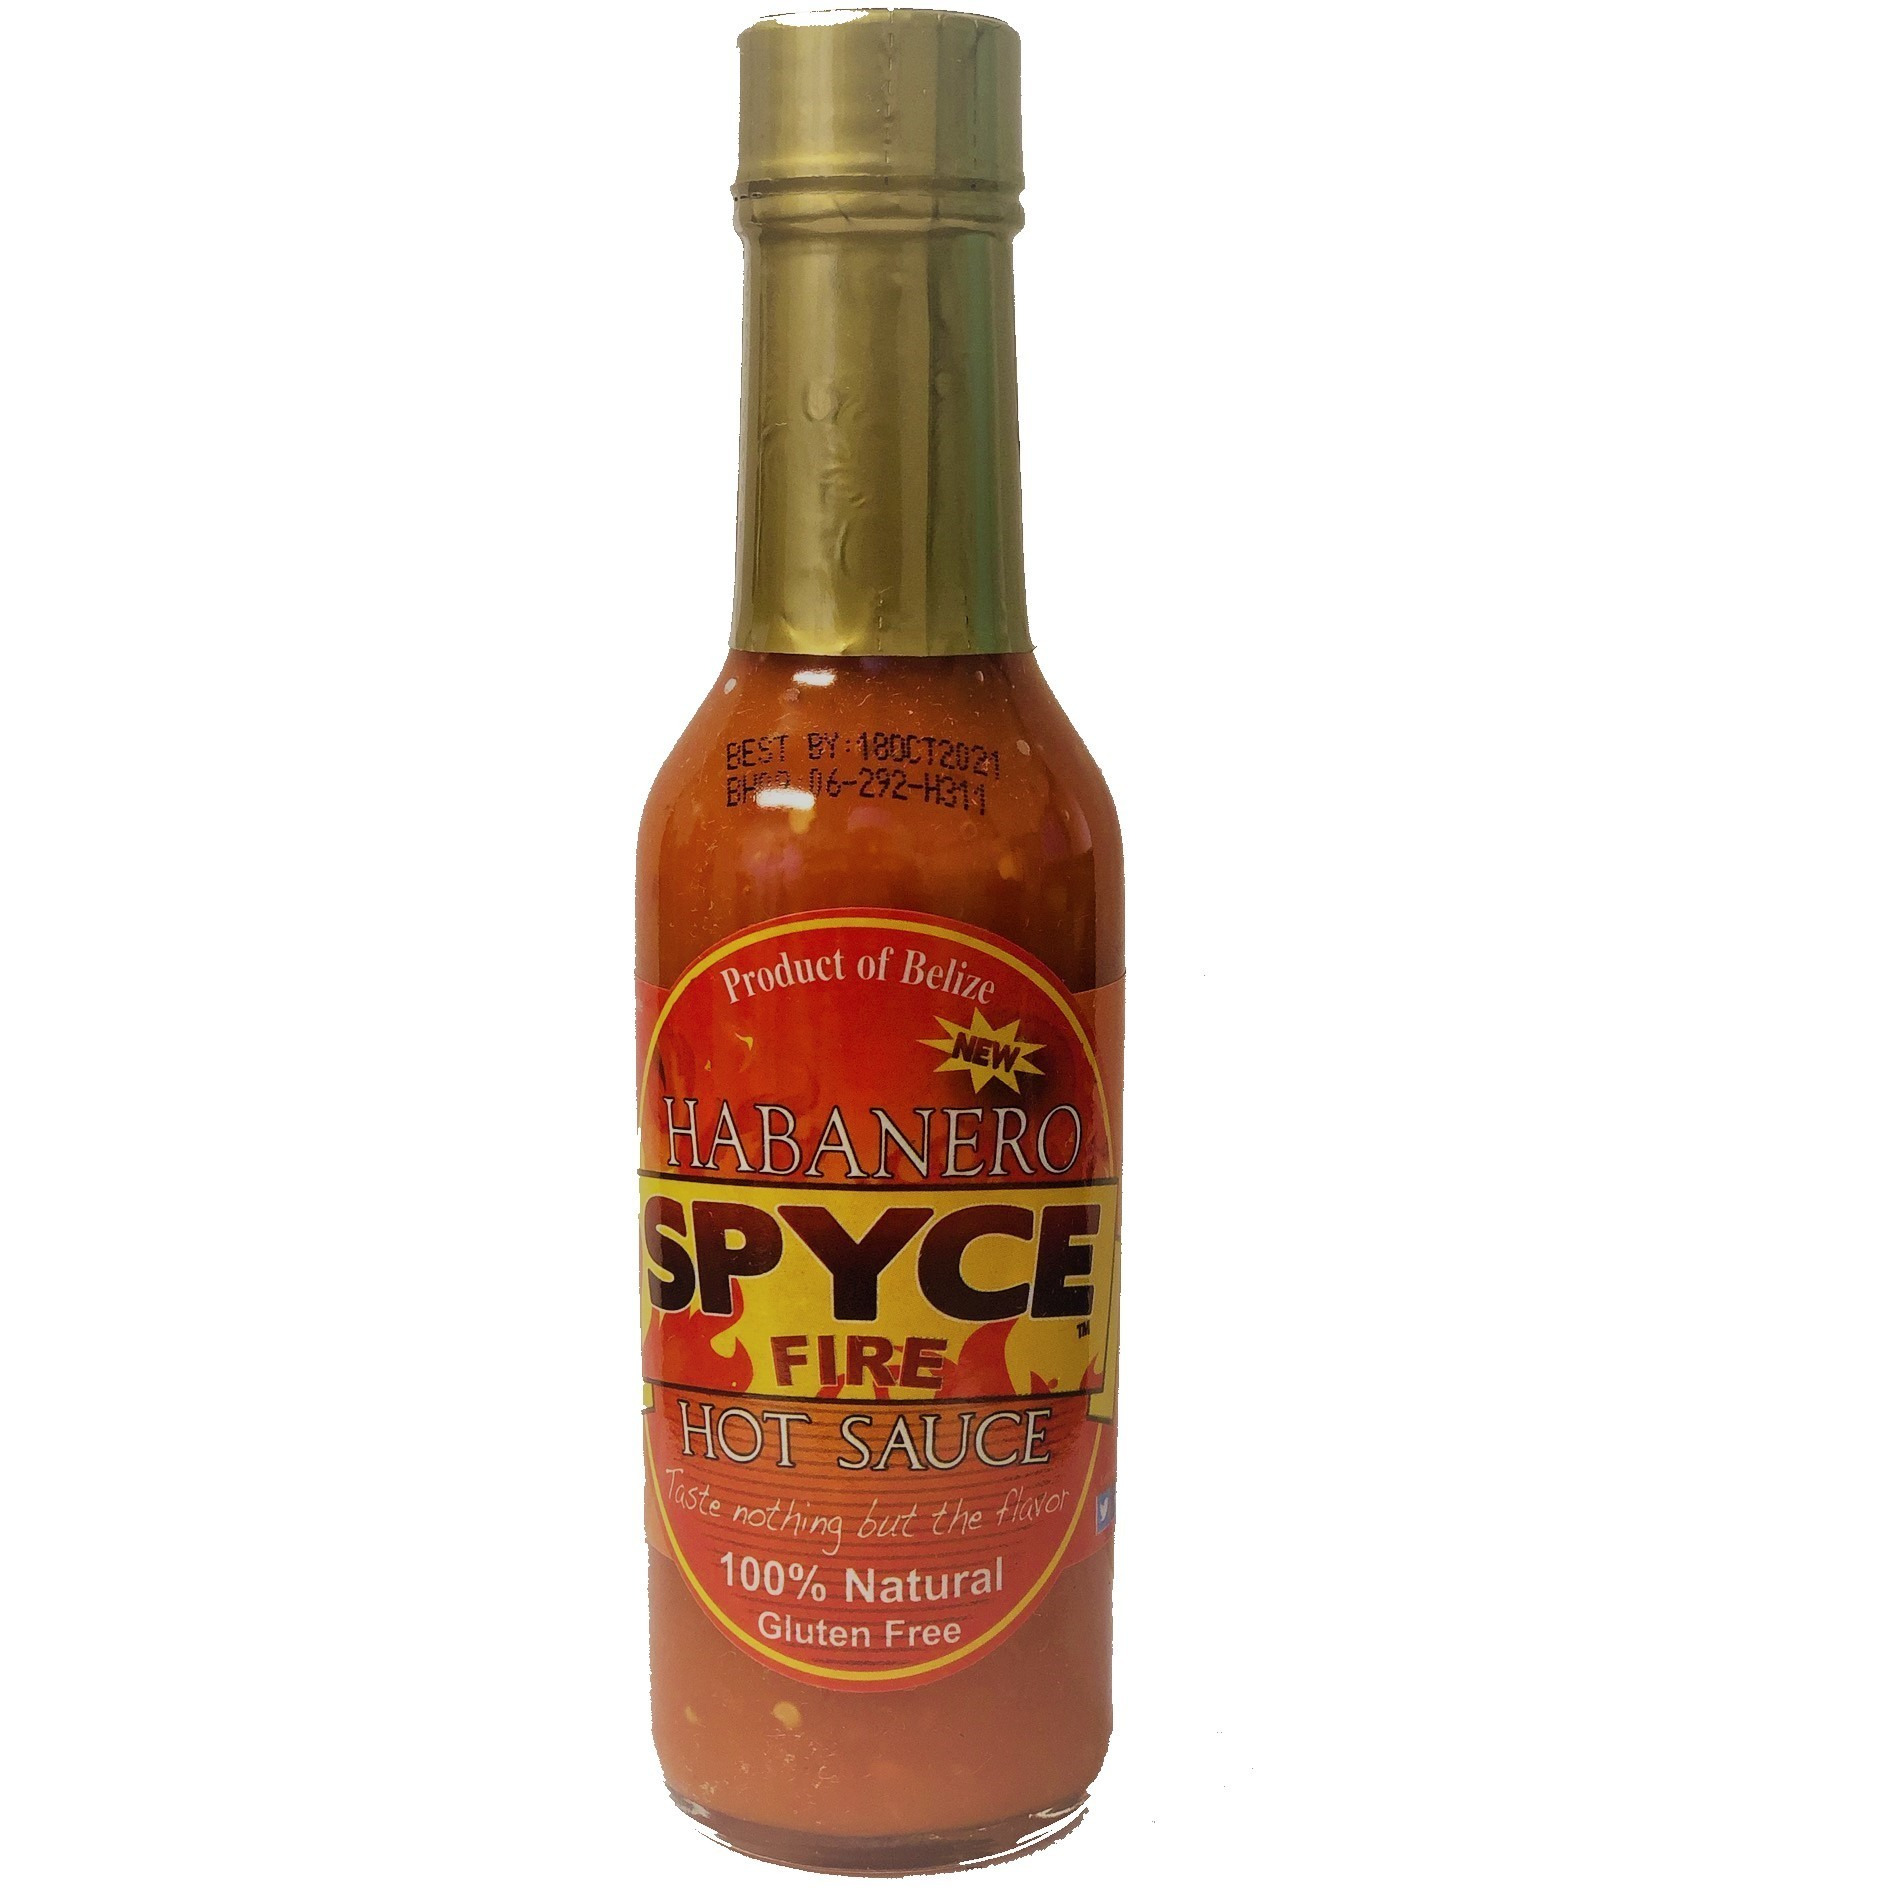 Spyce Habanero Fire Hot Sauce - 5 Fl Oz (148 Ml)